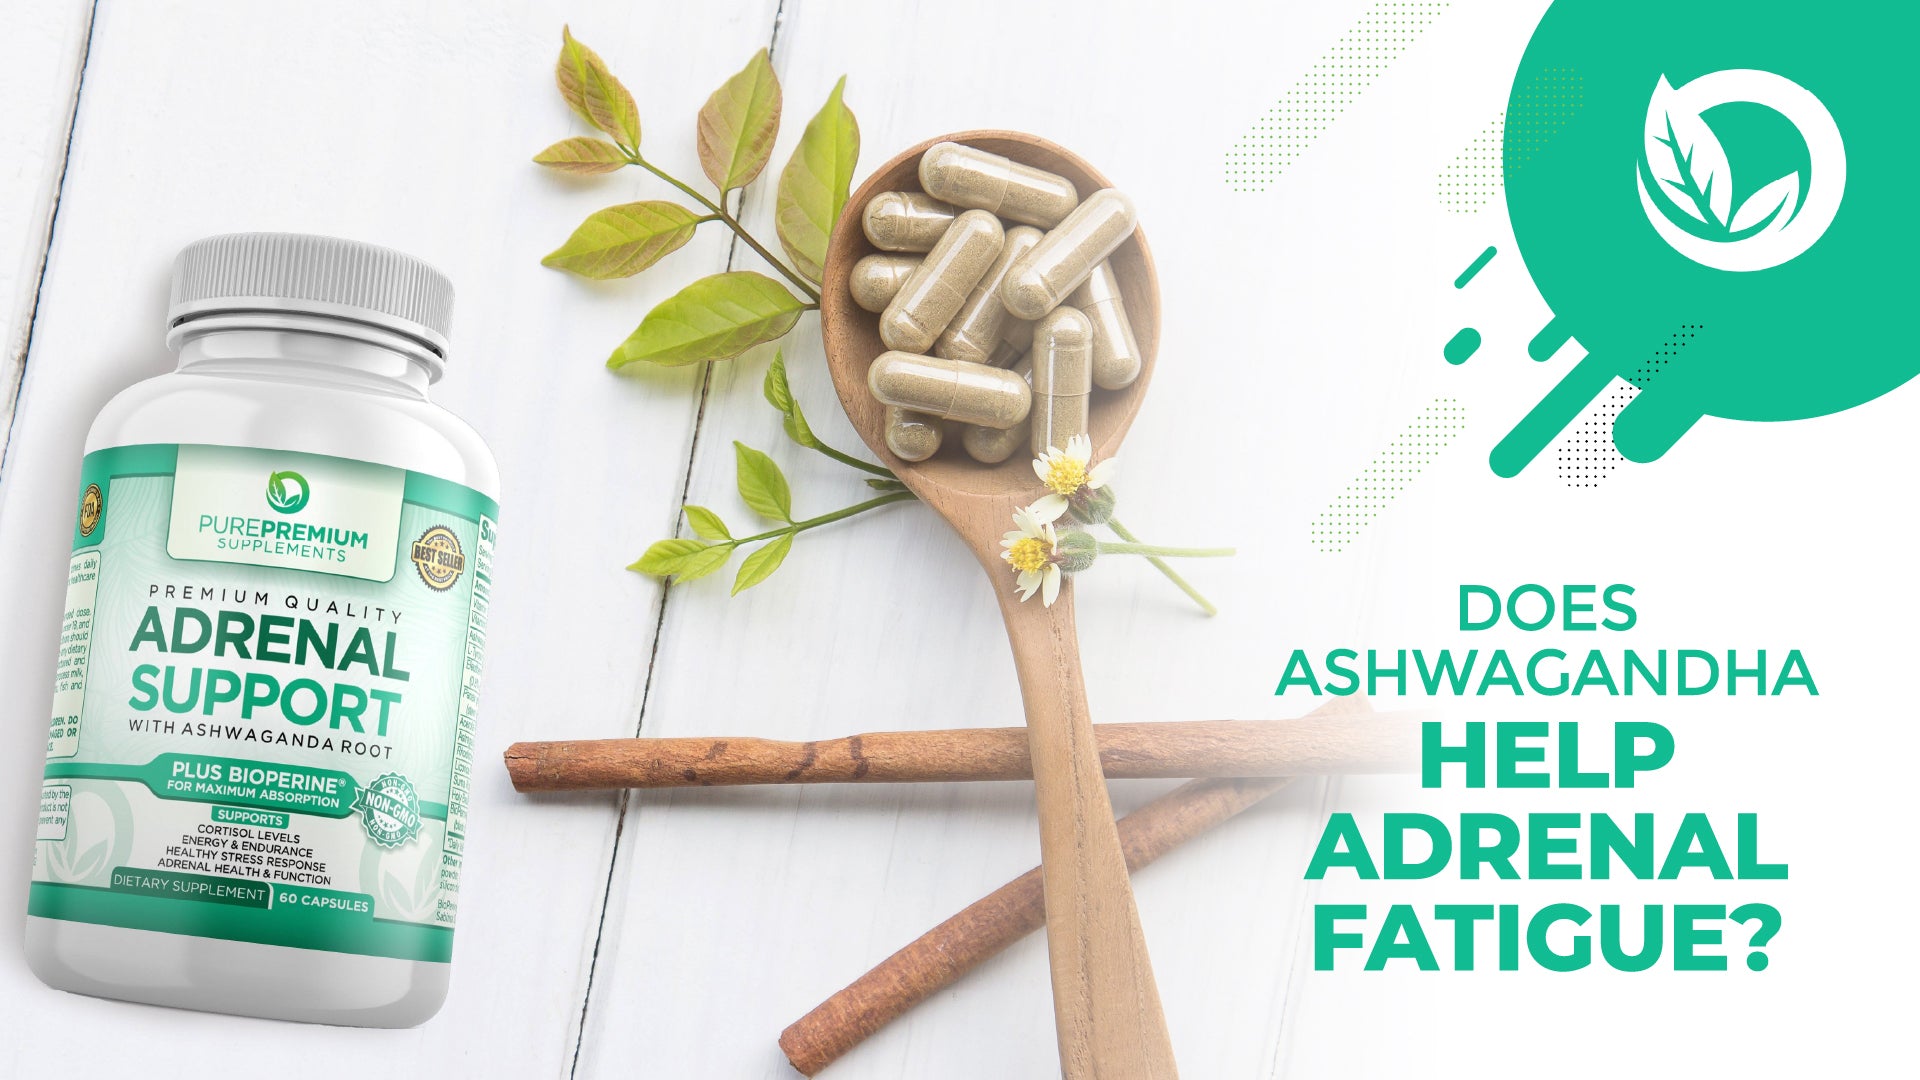 Does Ashwagandha Help Adrenal Fatigue?